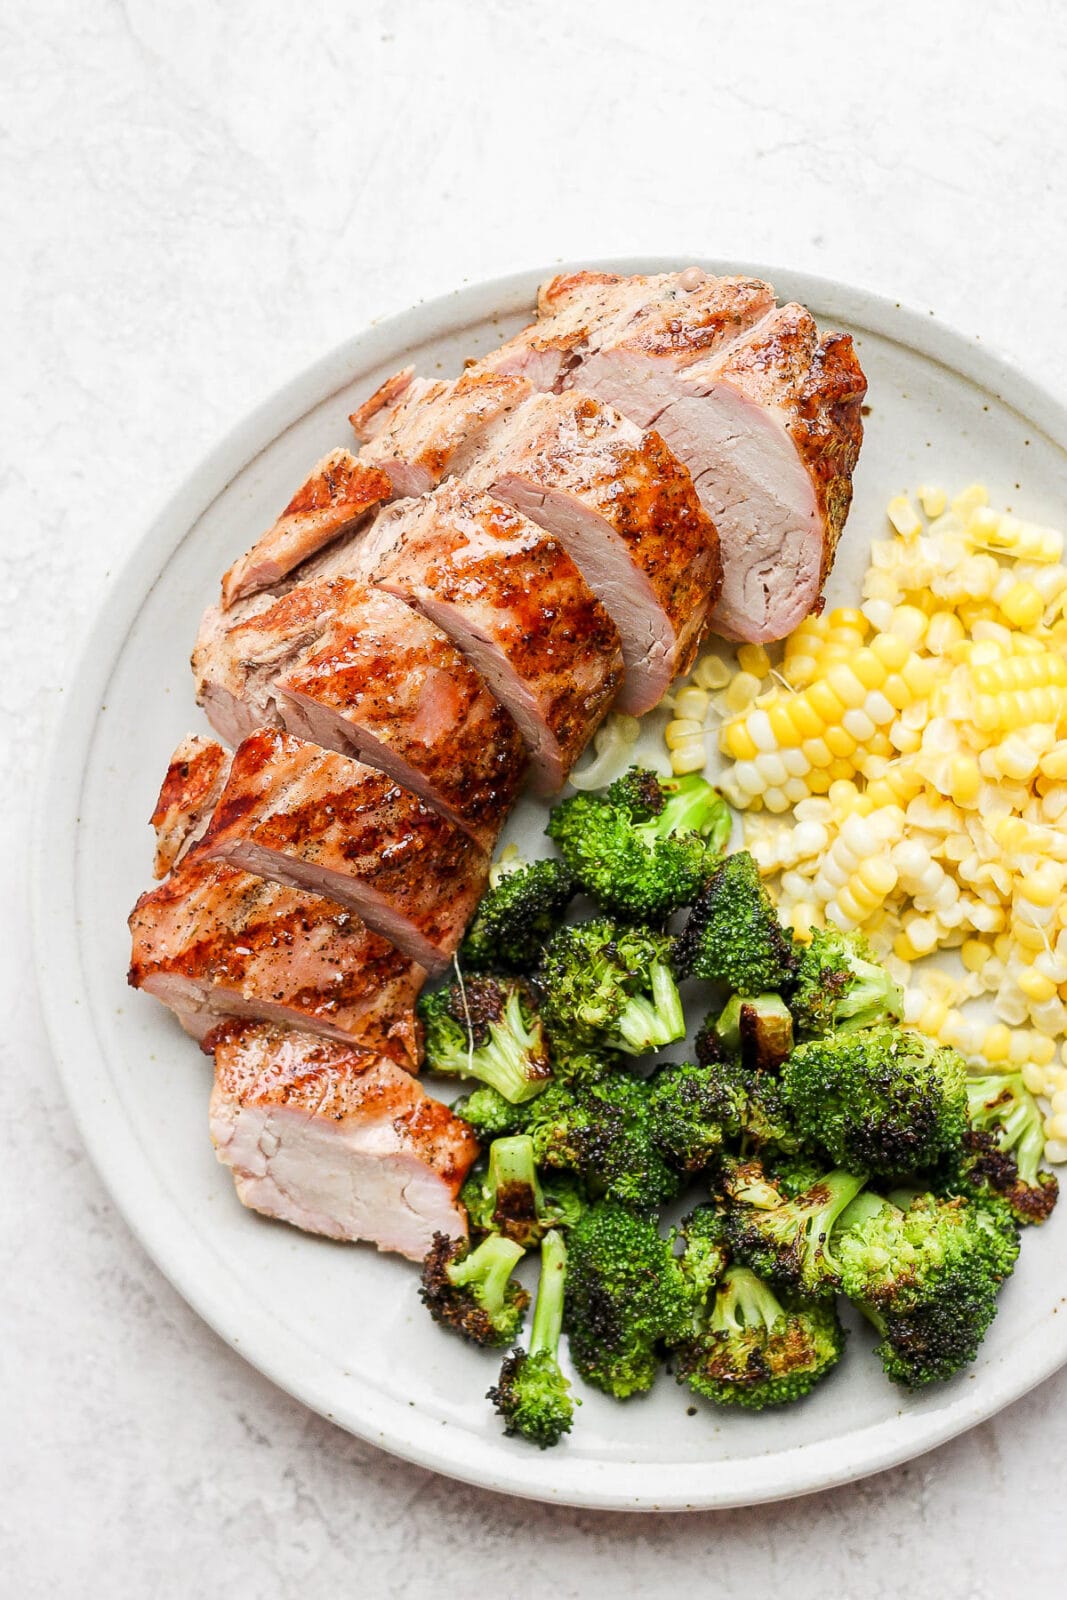 Smoked broccoli on a plate with sliced pork tenderloin and corn.